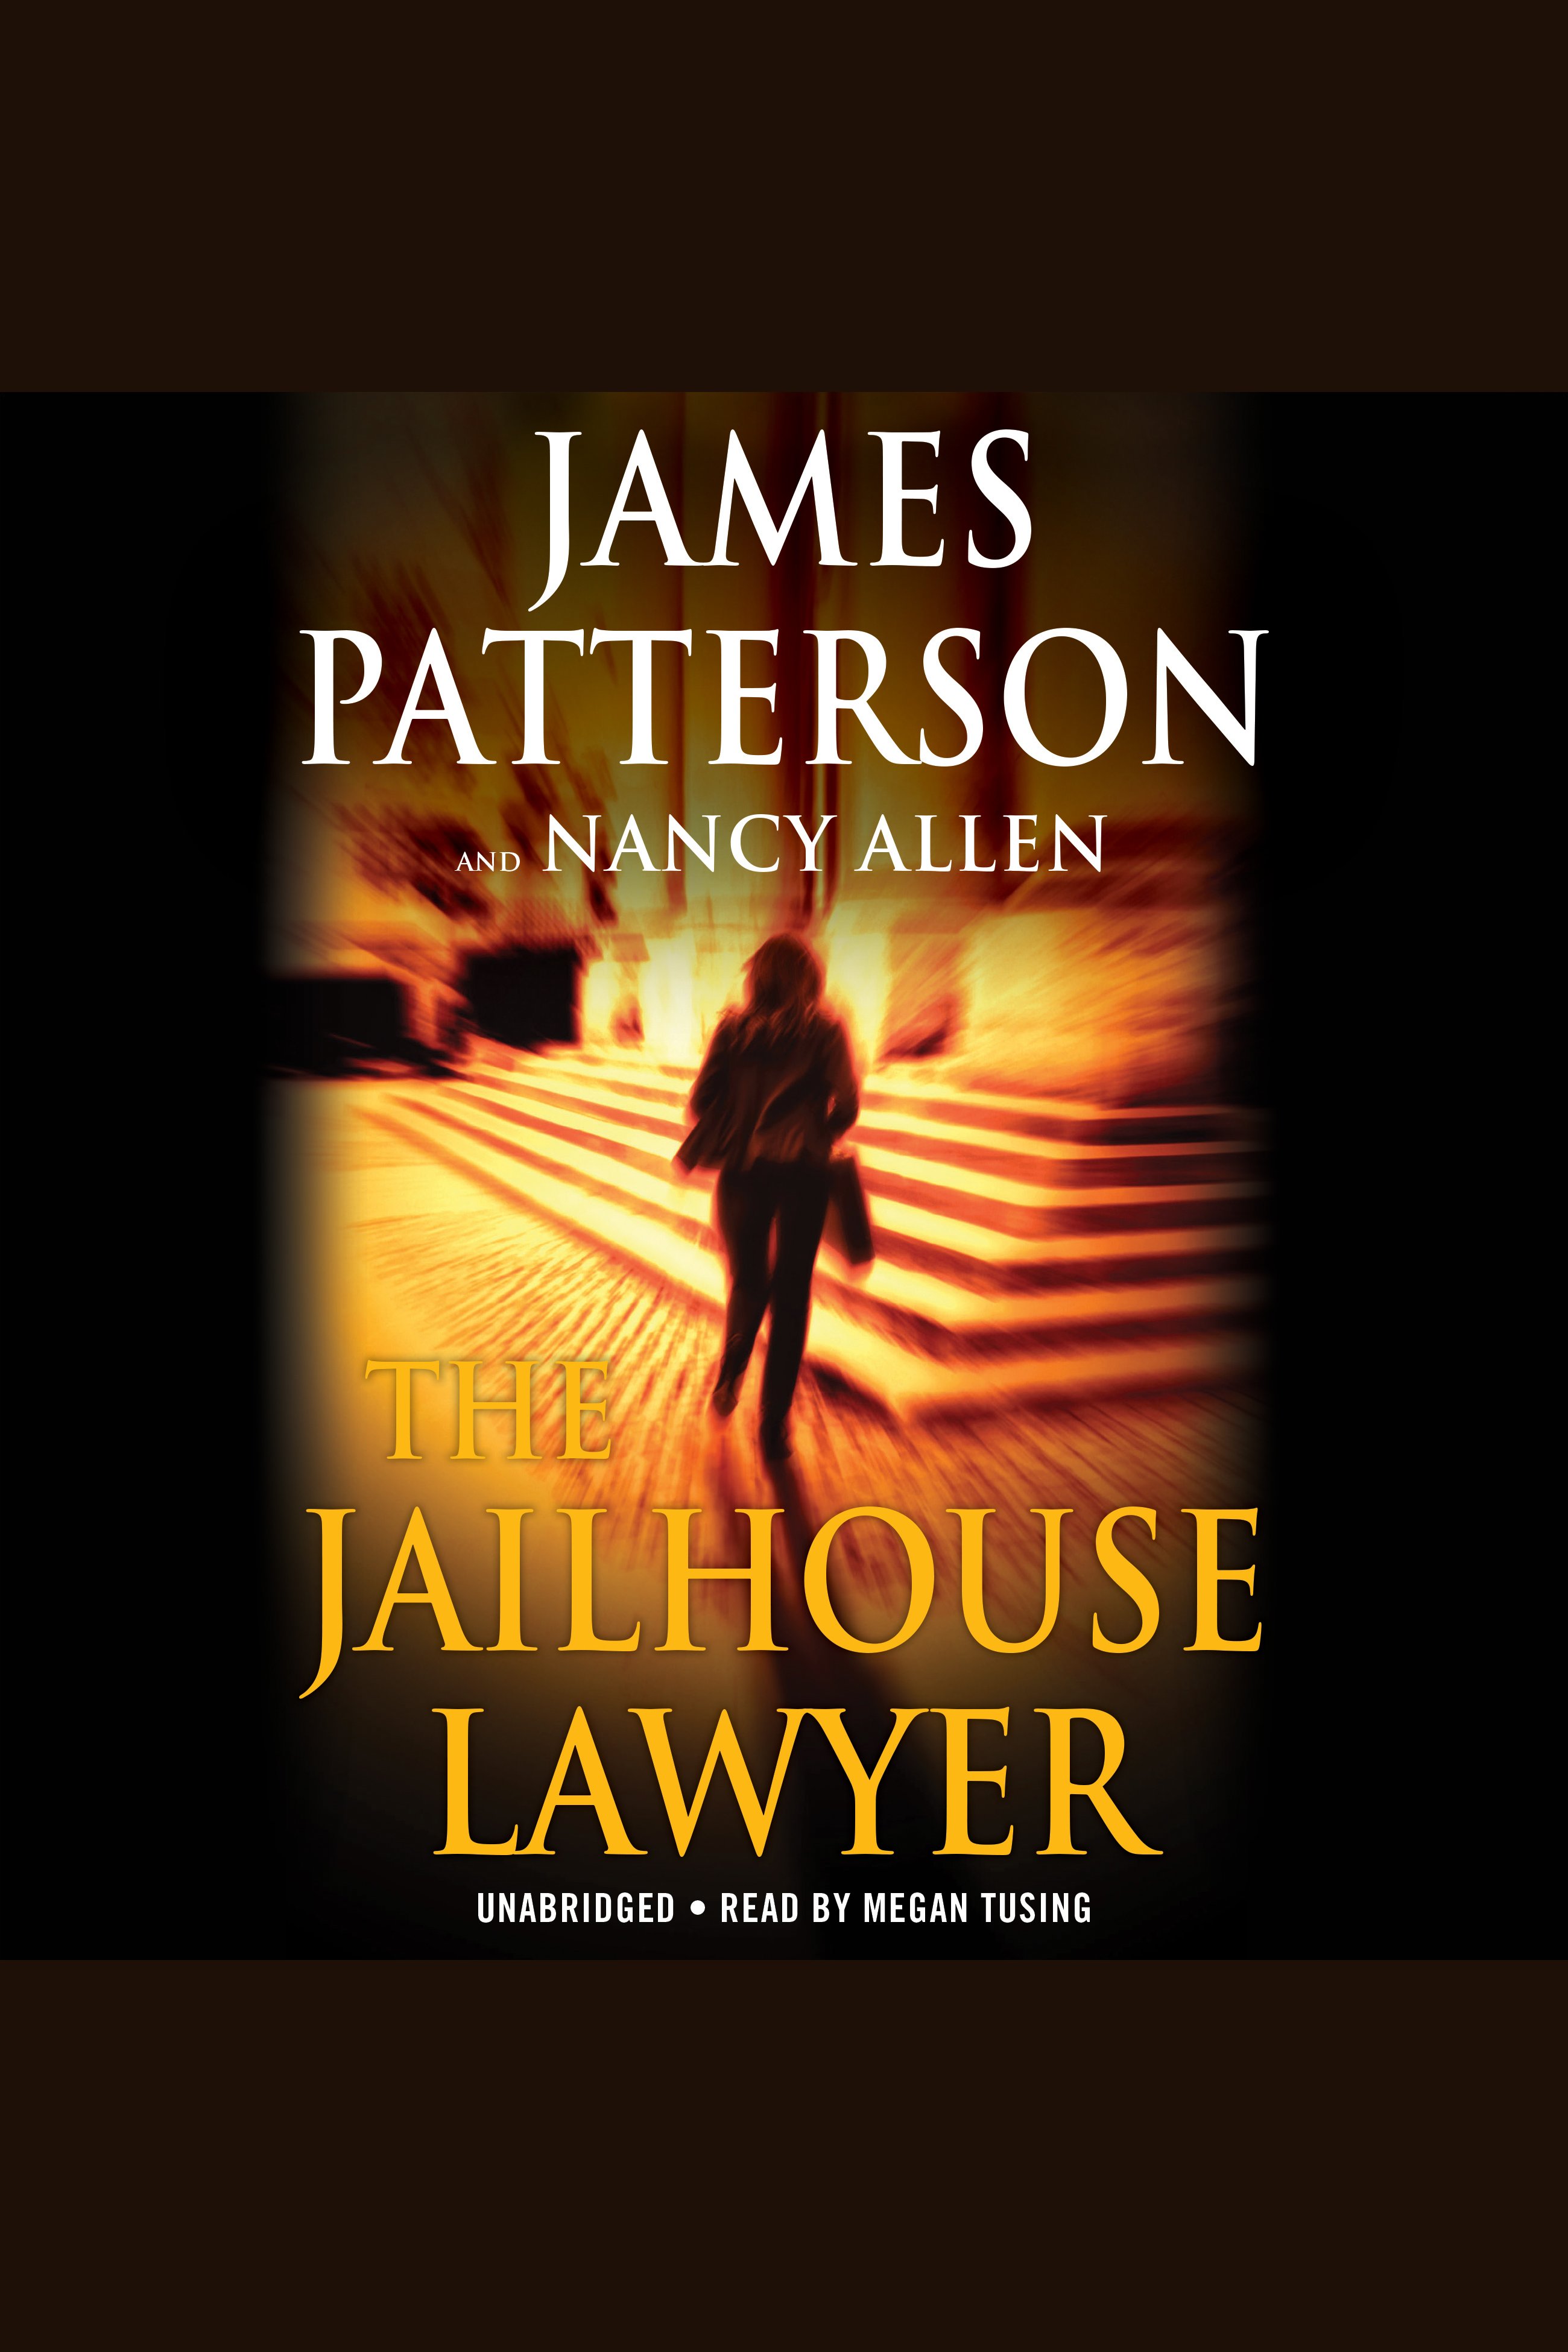 The Jailhouse Lawyer